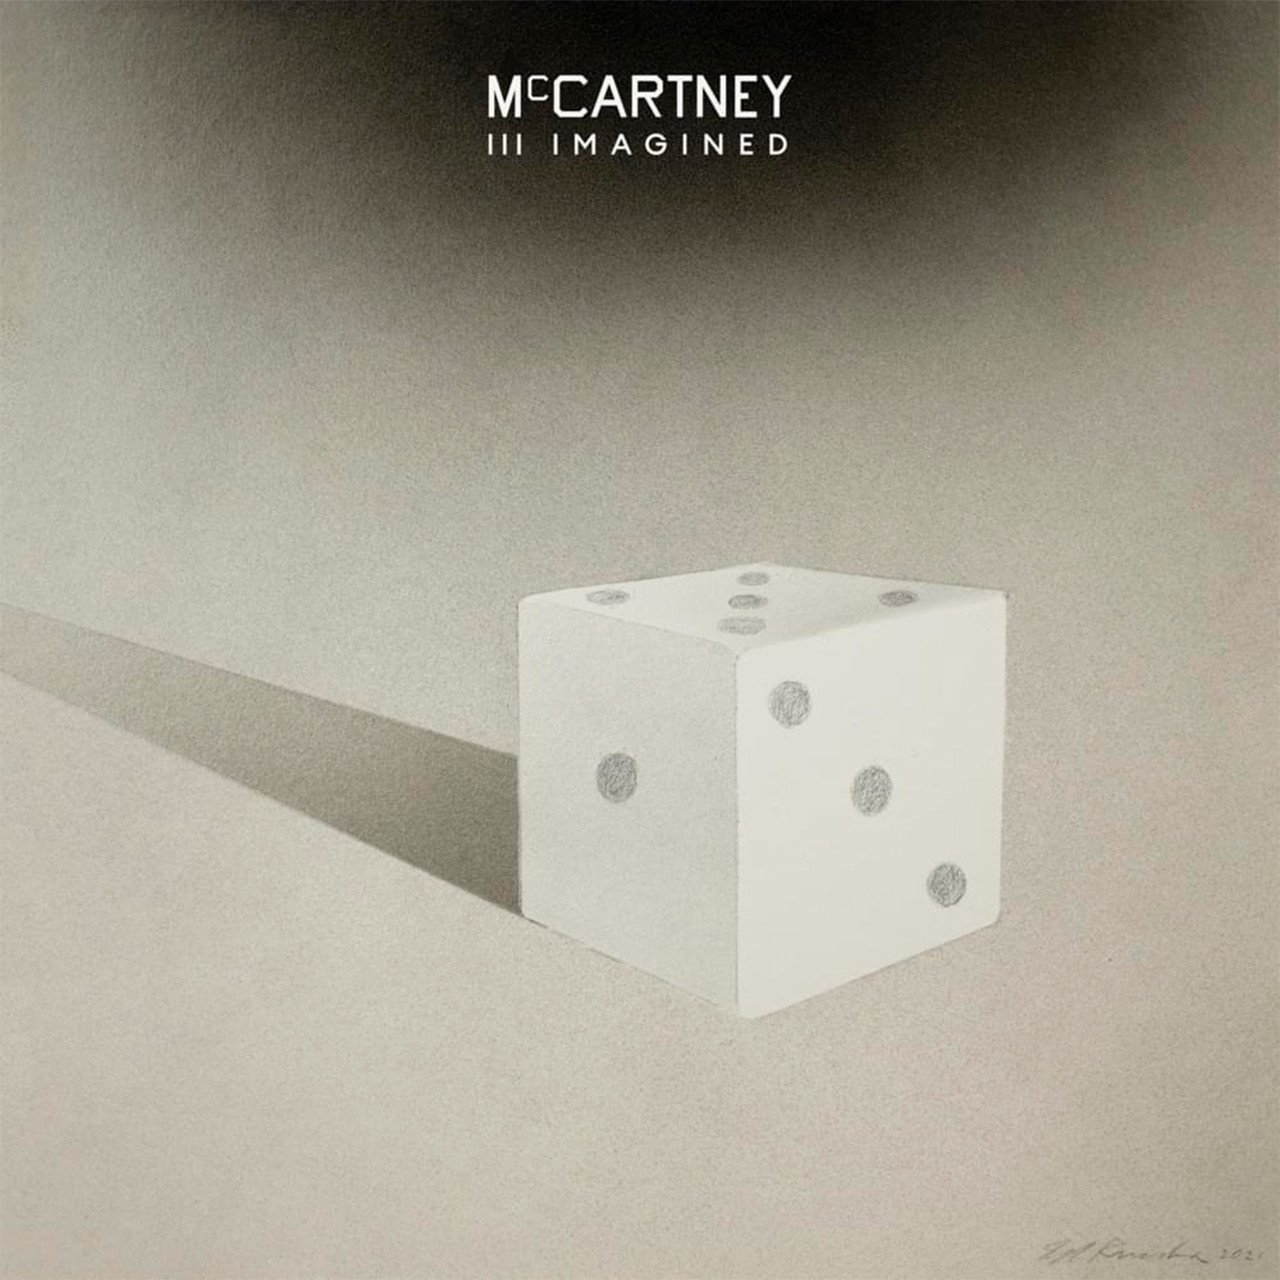 Рок Capitol US Paul McCartney - McCartney III Imagined рок umc paul mccartney pipes of peace